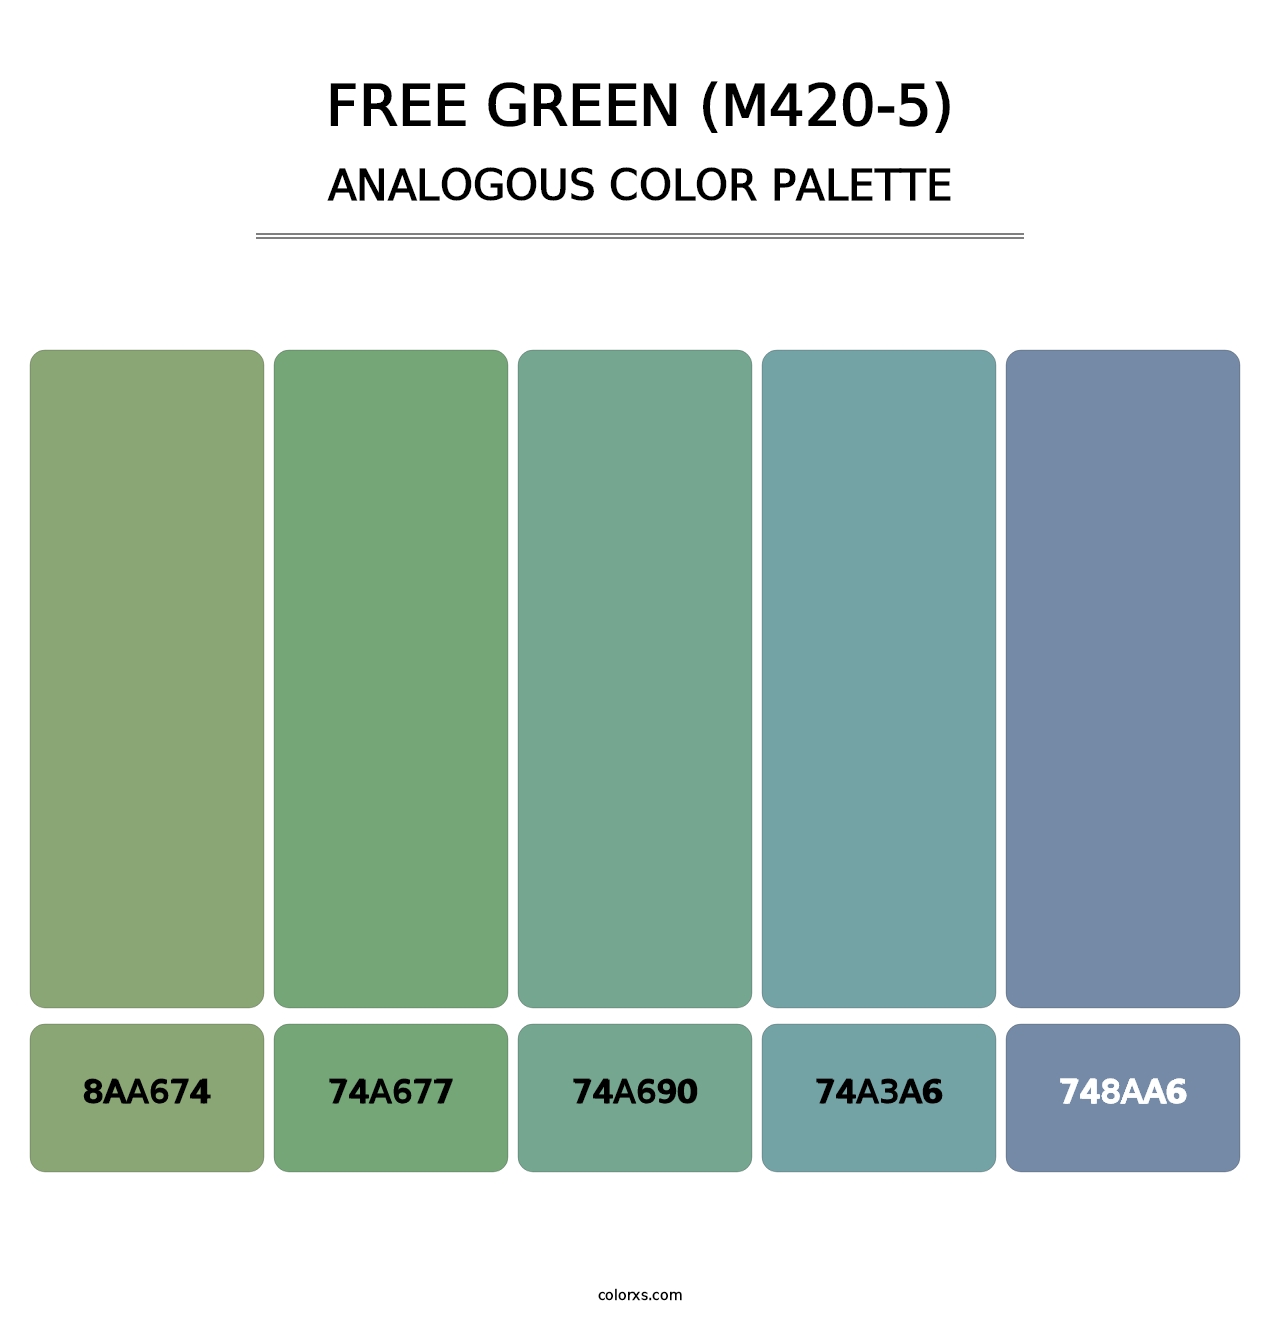 Free Green (M420-5) - Analogous Color Palette